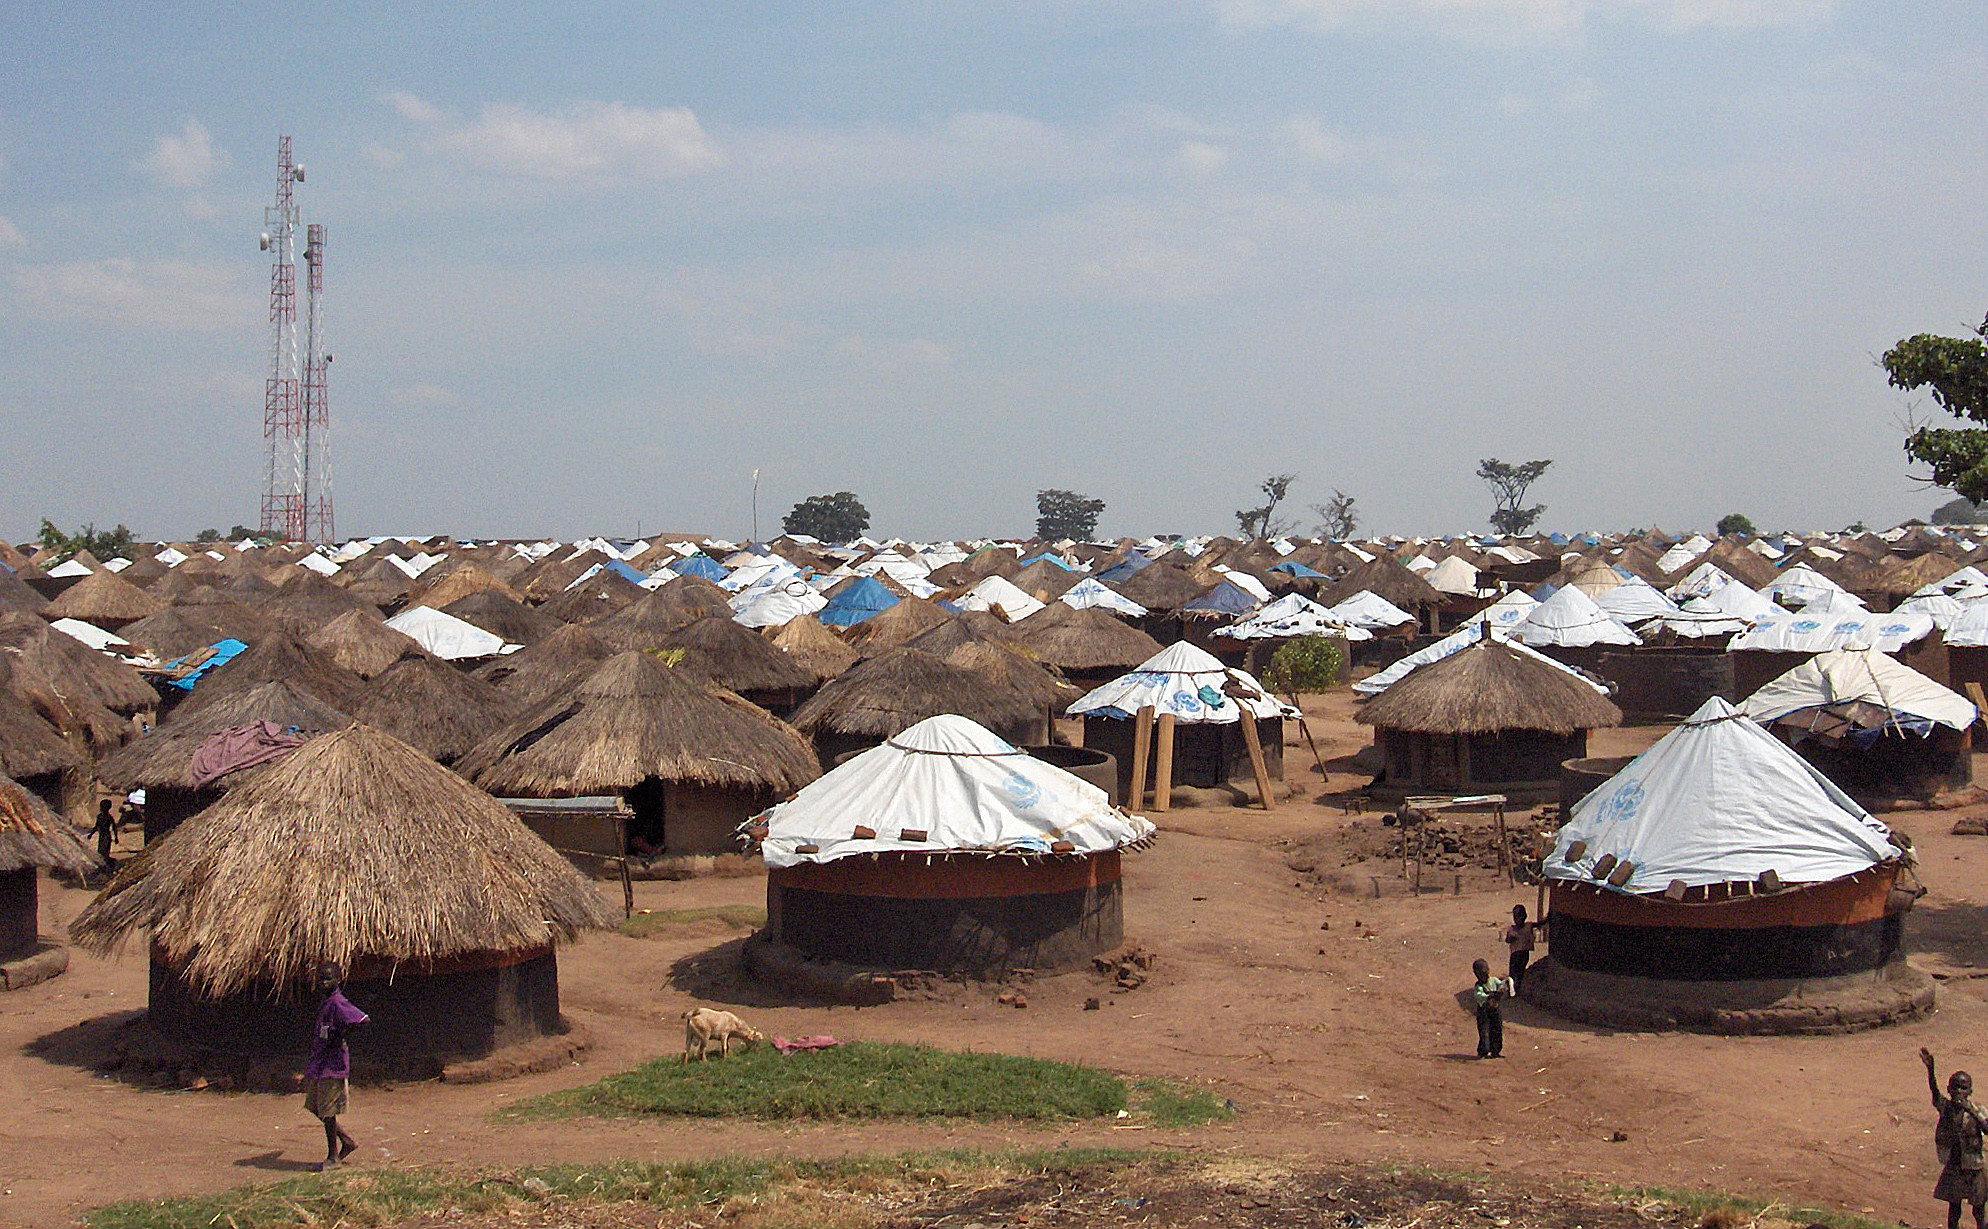 Pabbo IDP camp 2005. Photo by John and Melanie via Flickr CC BY-NC 2.0